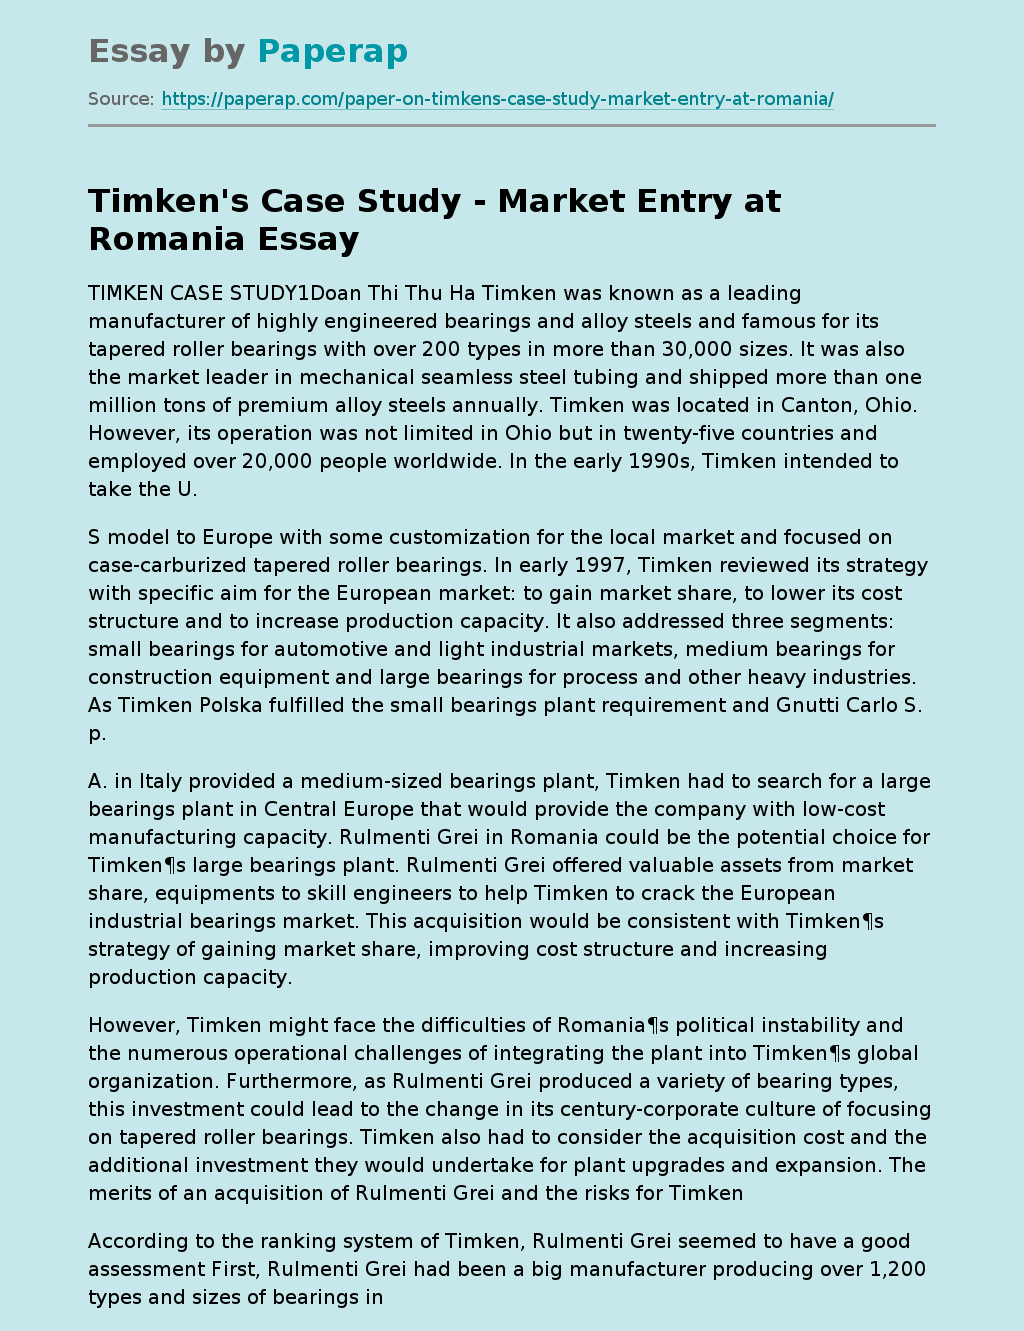 Timken's Case Study - Market Entry at Romania